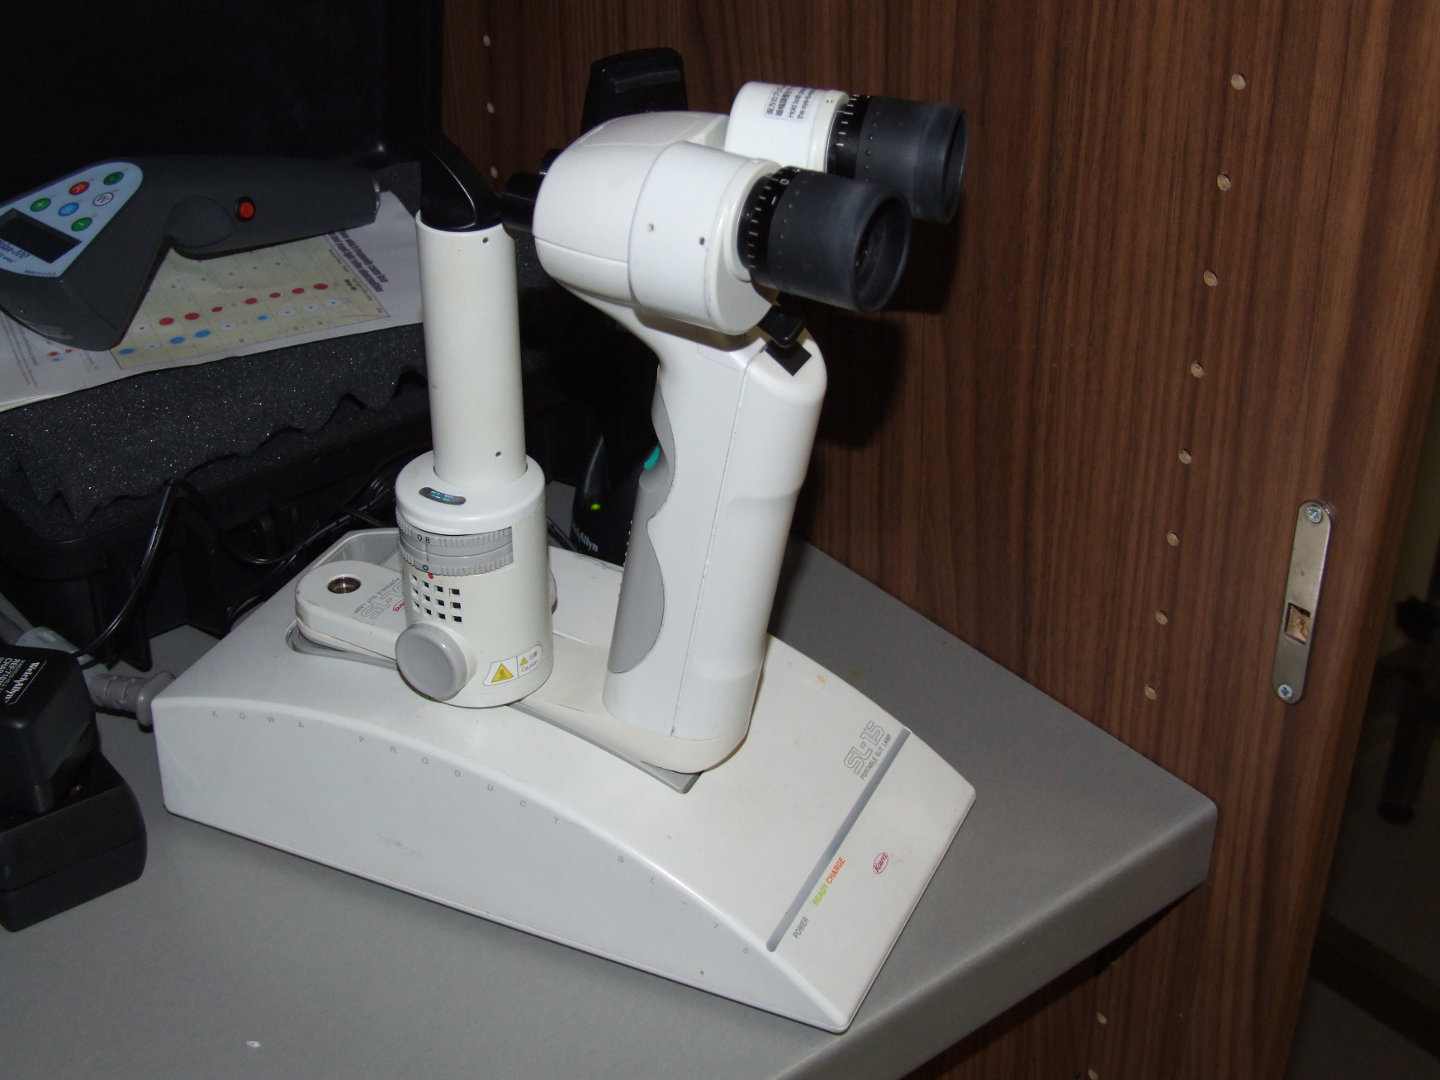 Slit-lamp biomicroscope